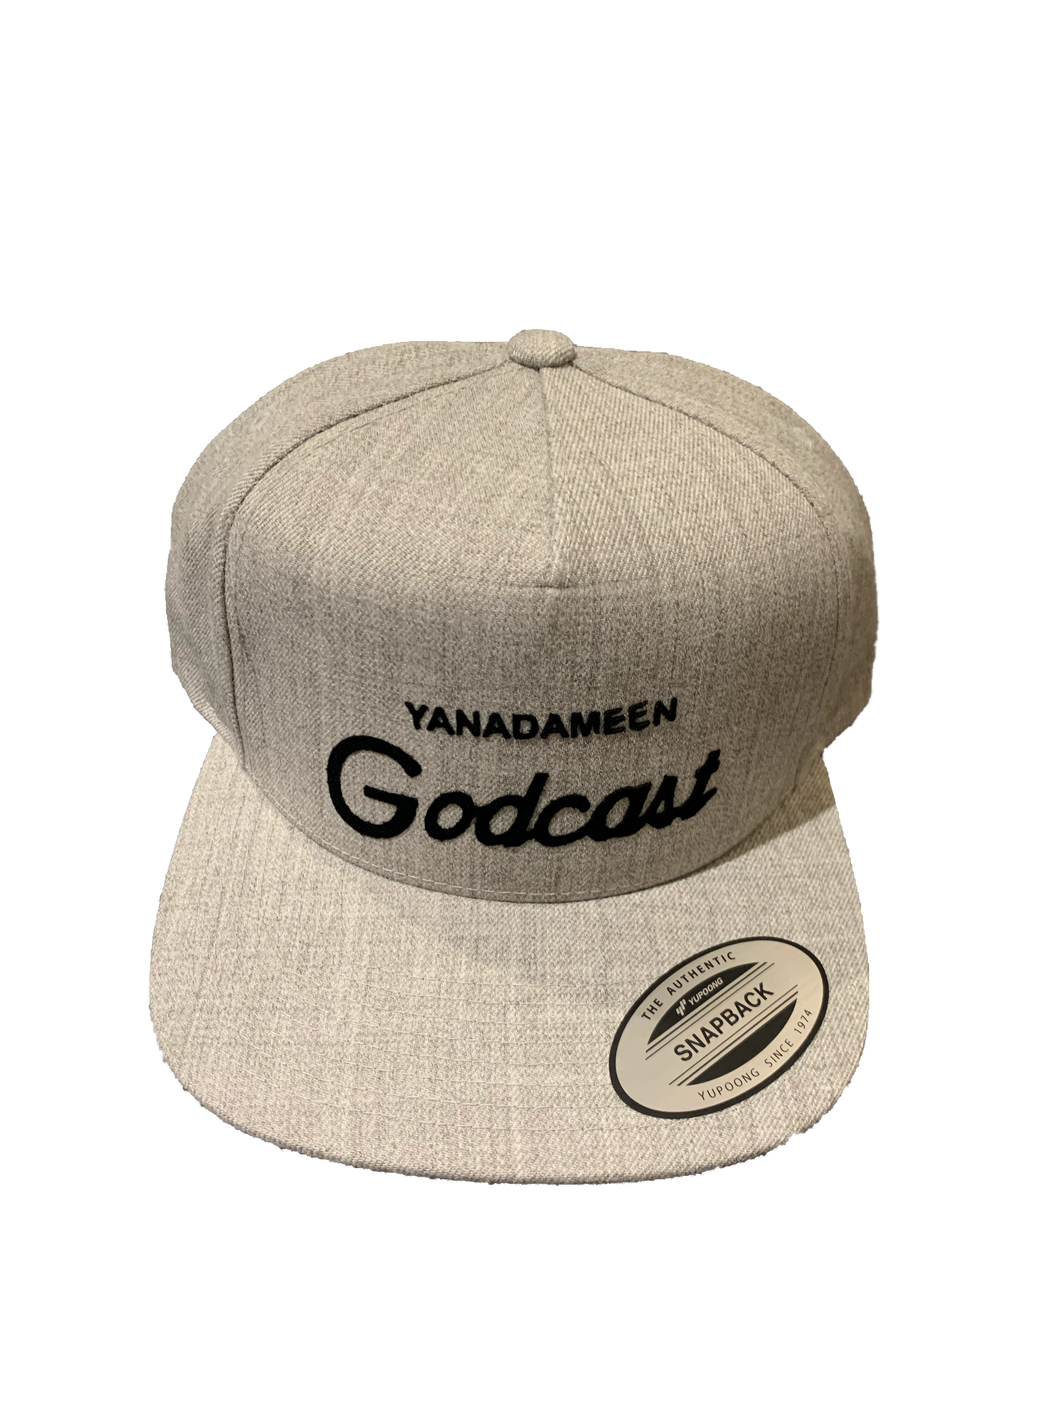 Yanadameen Godcast SnapBack